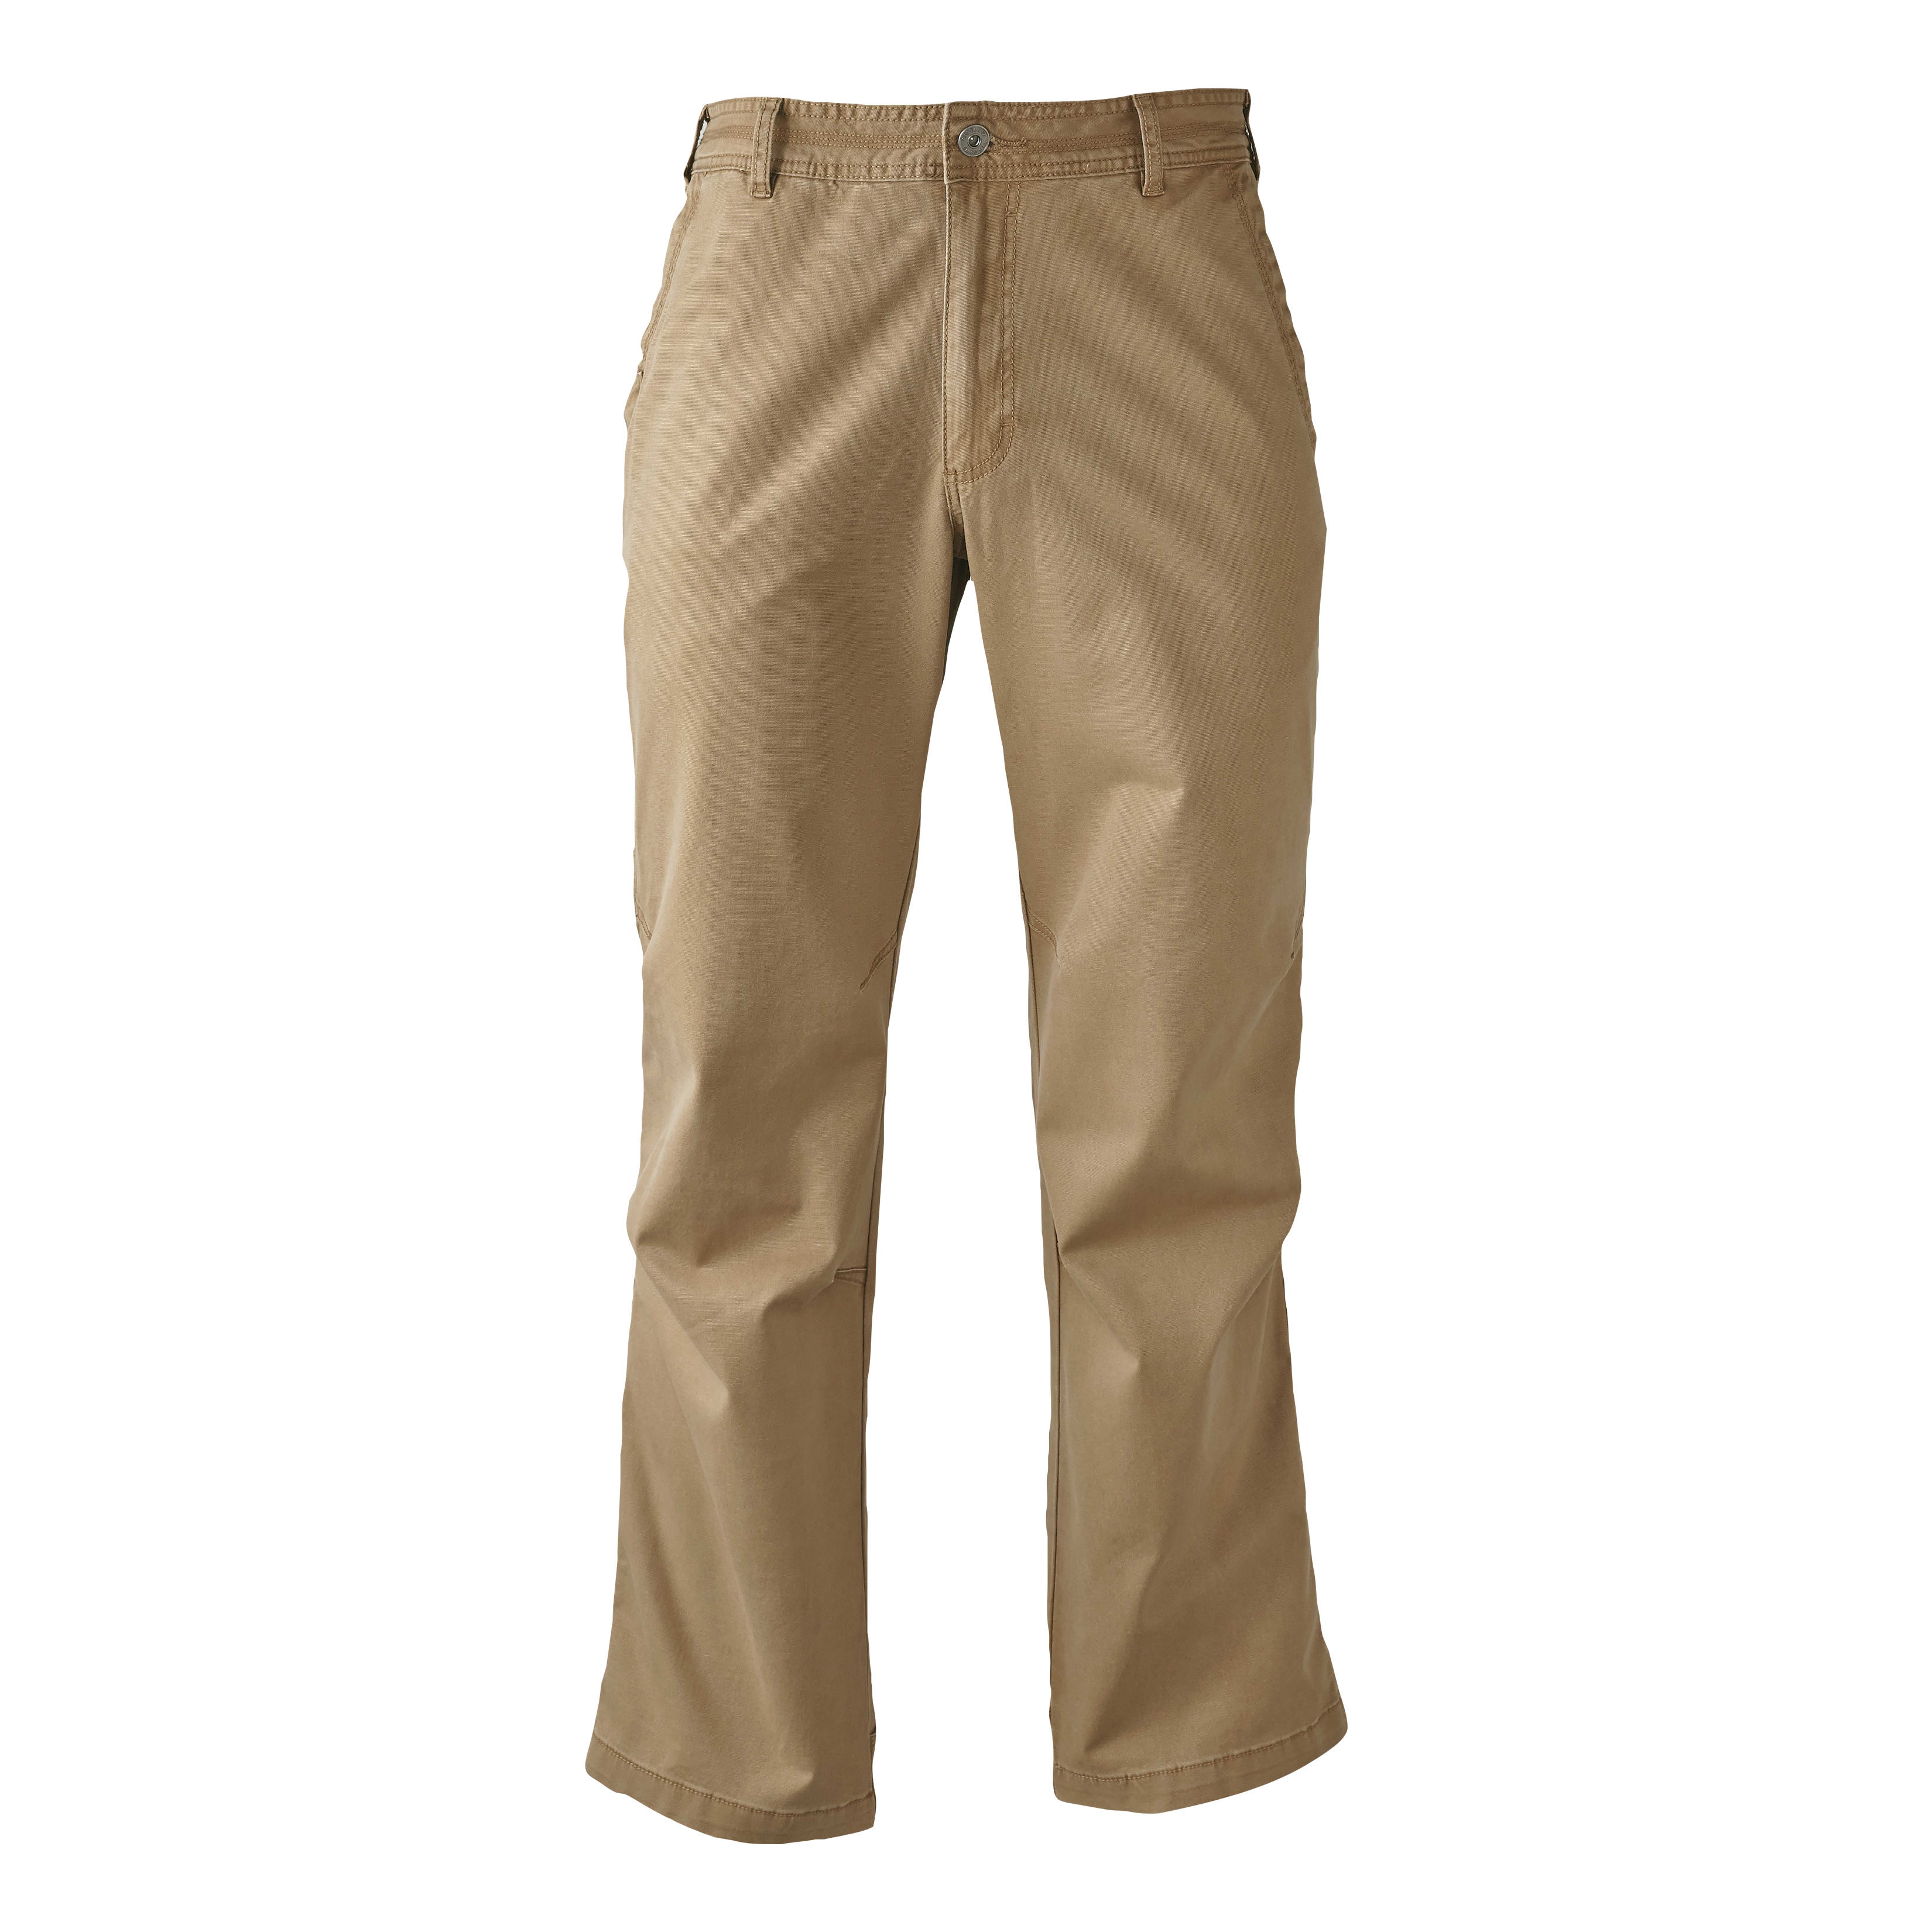 Cabela’s Ultimate Rugged Pants – 32-Inch Inseam - Field Khaki